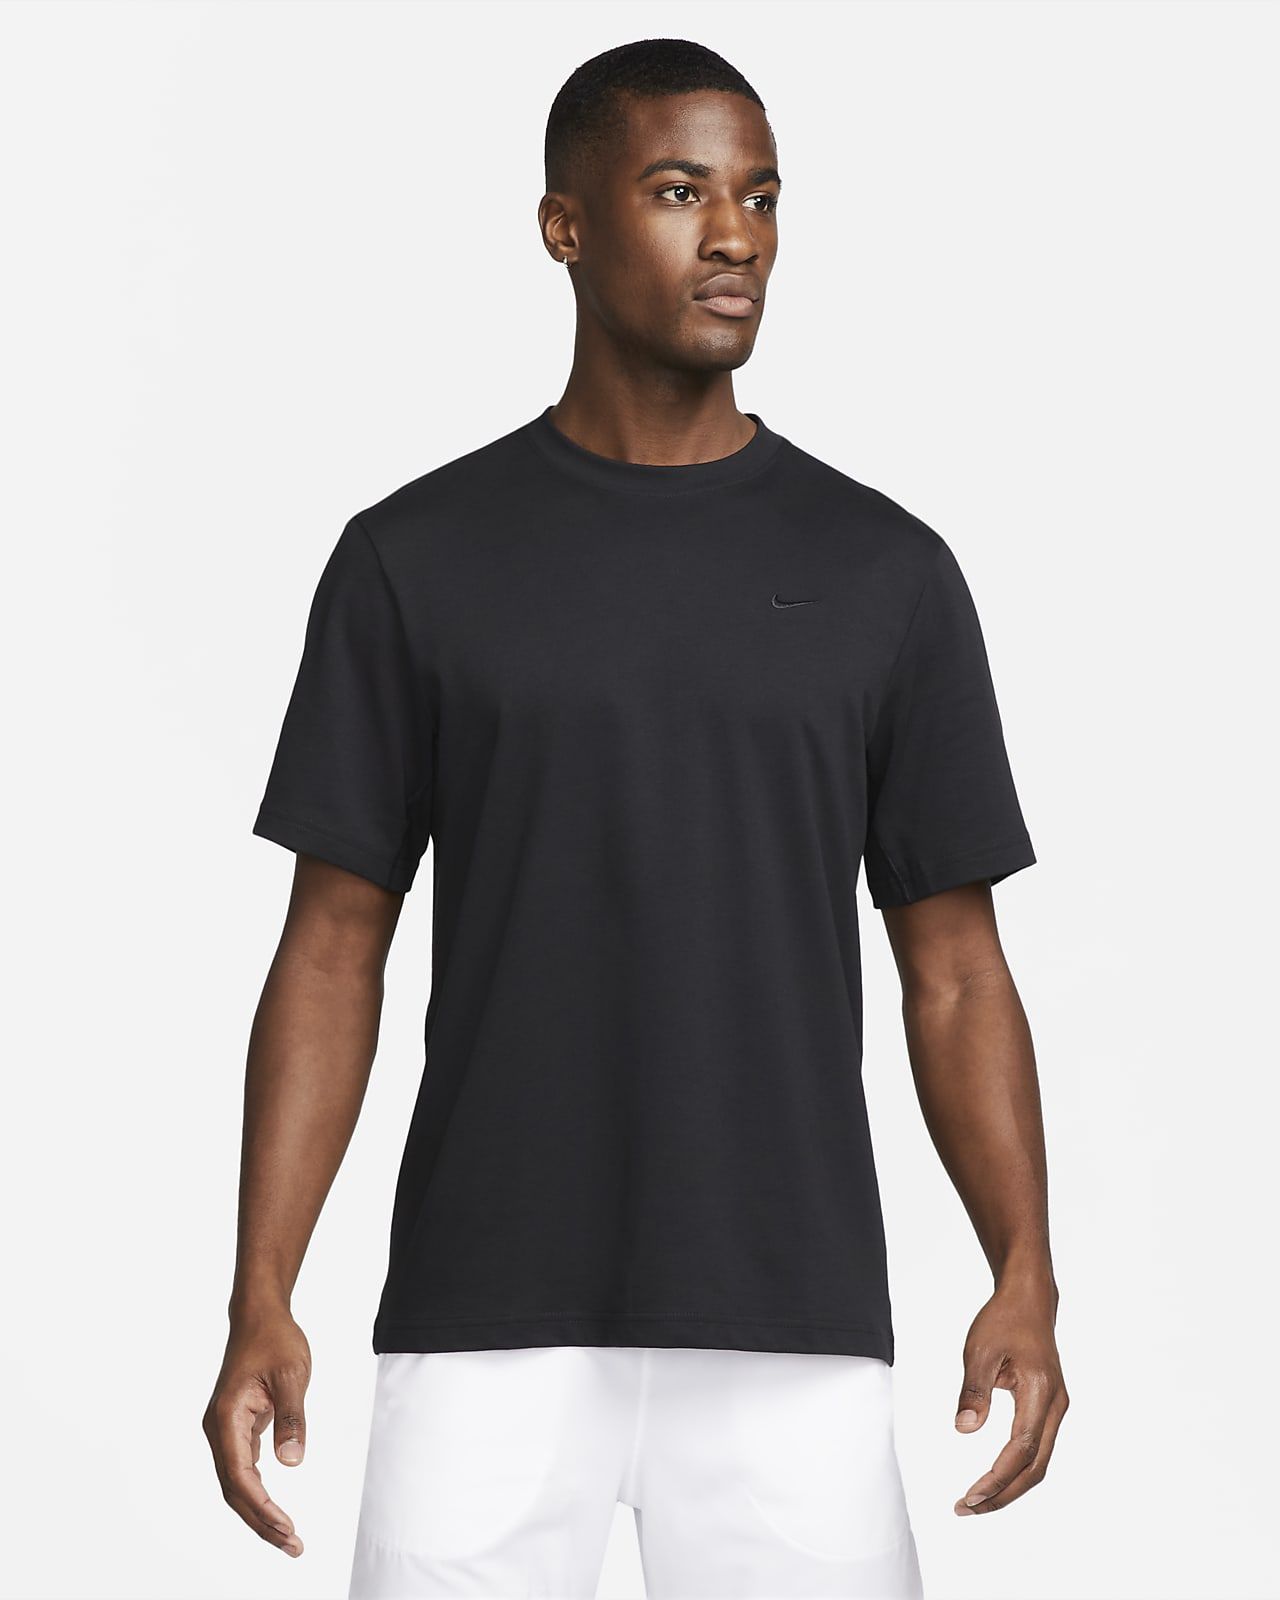 Nike Primary Men's Dri-FIT Short-Sleeve Versatile Top. Nike.com | Nike (US)